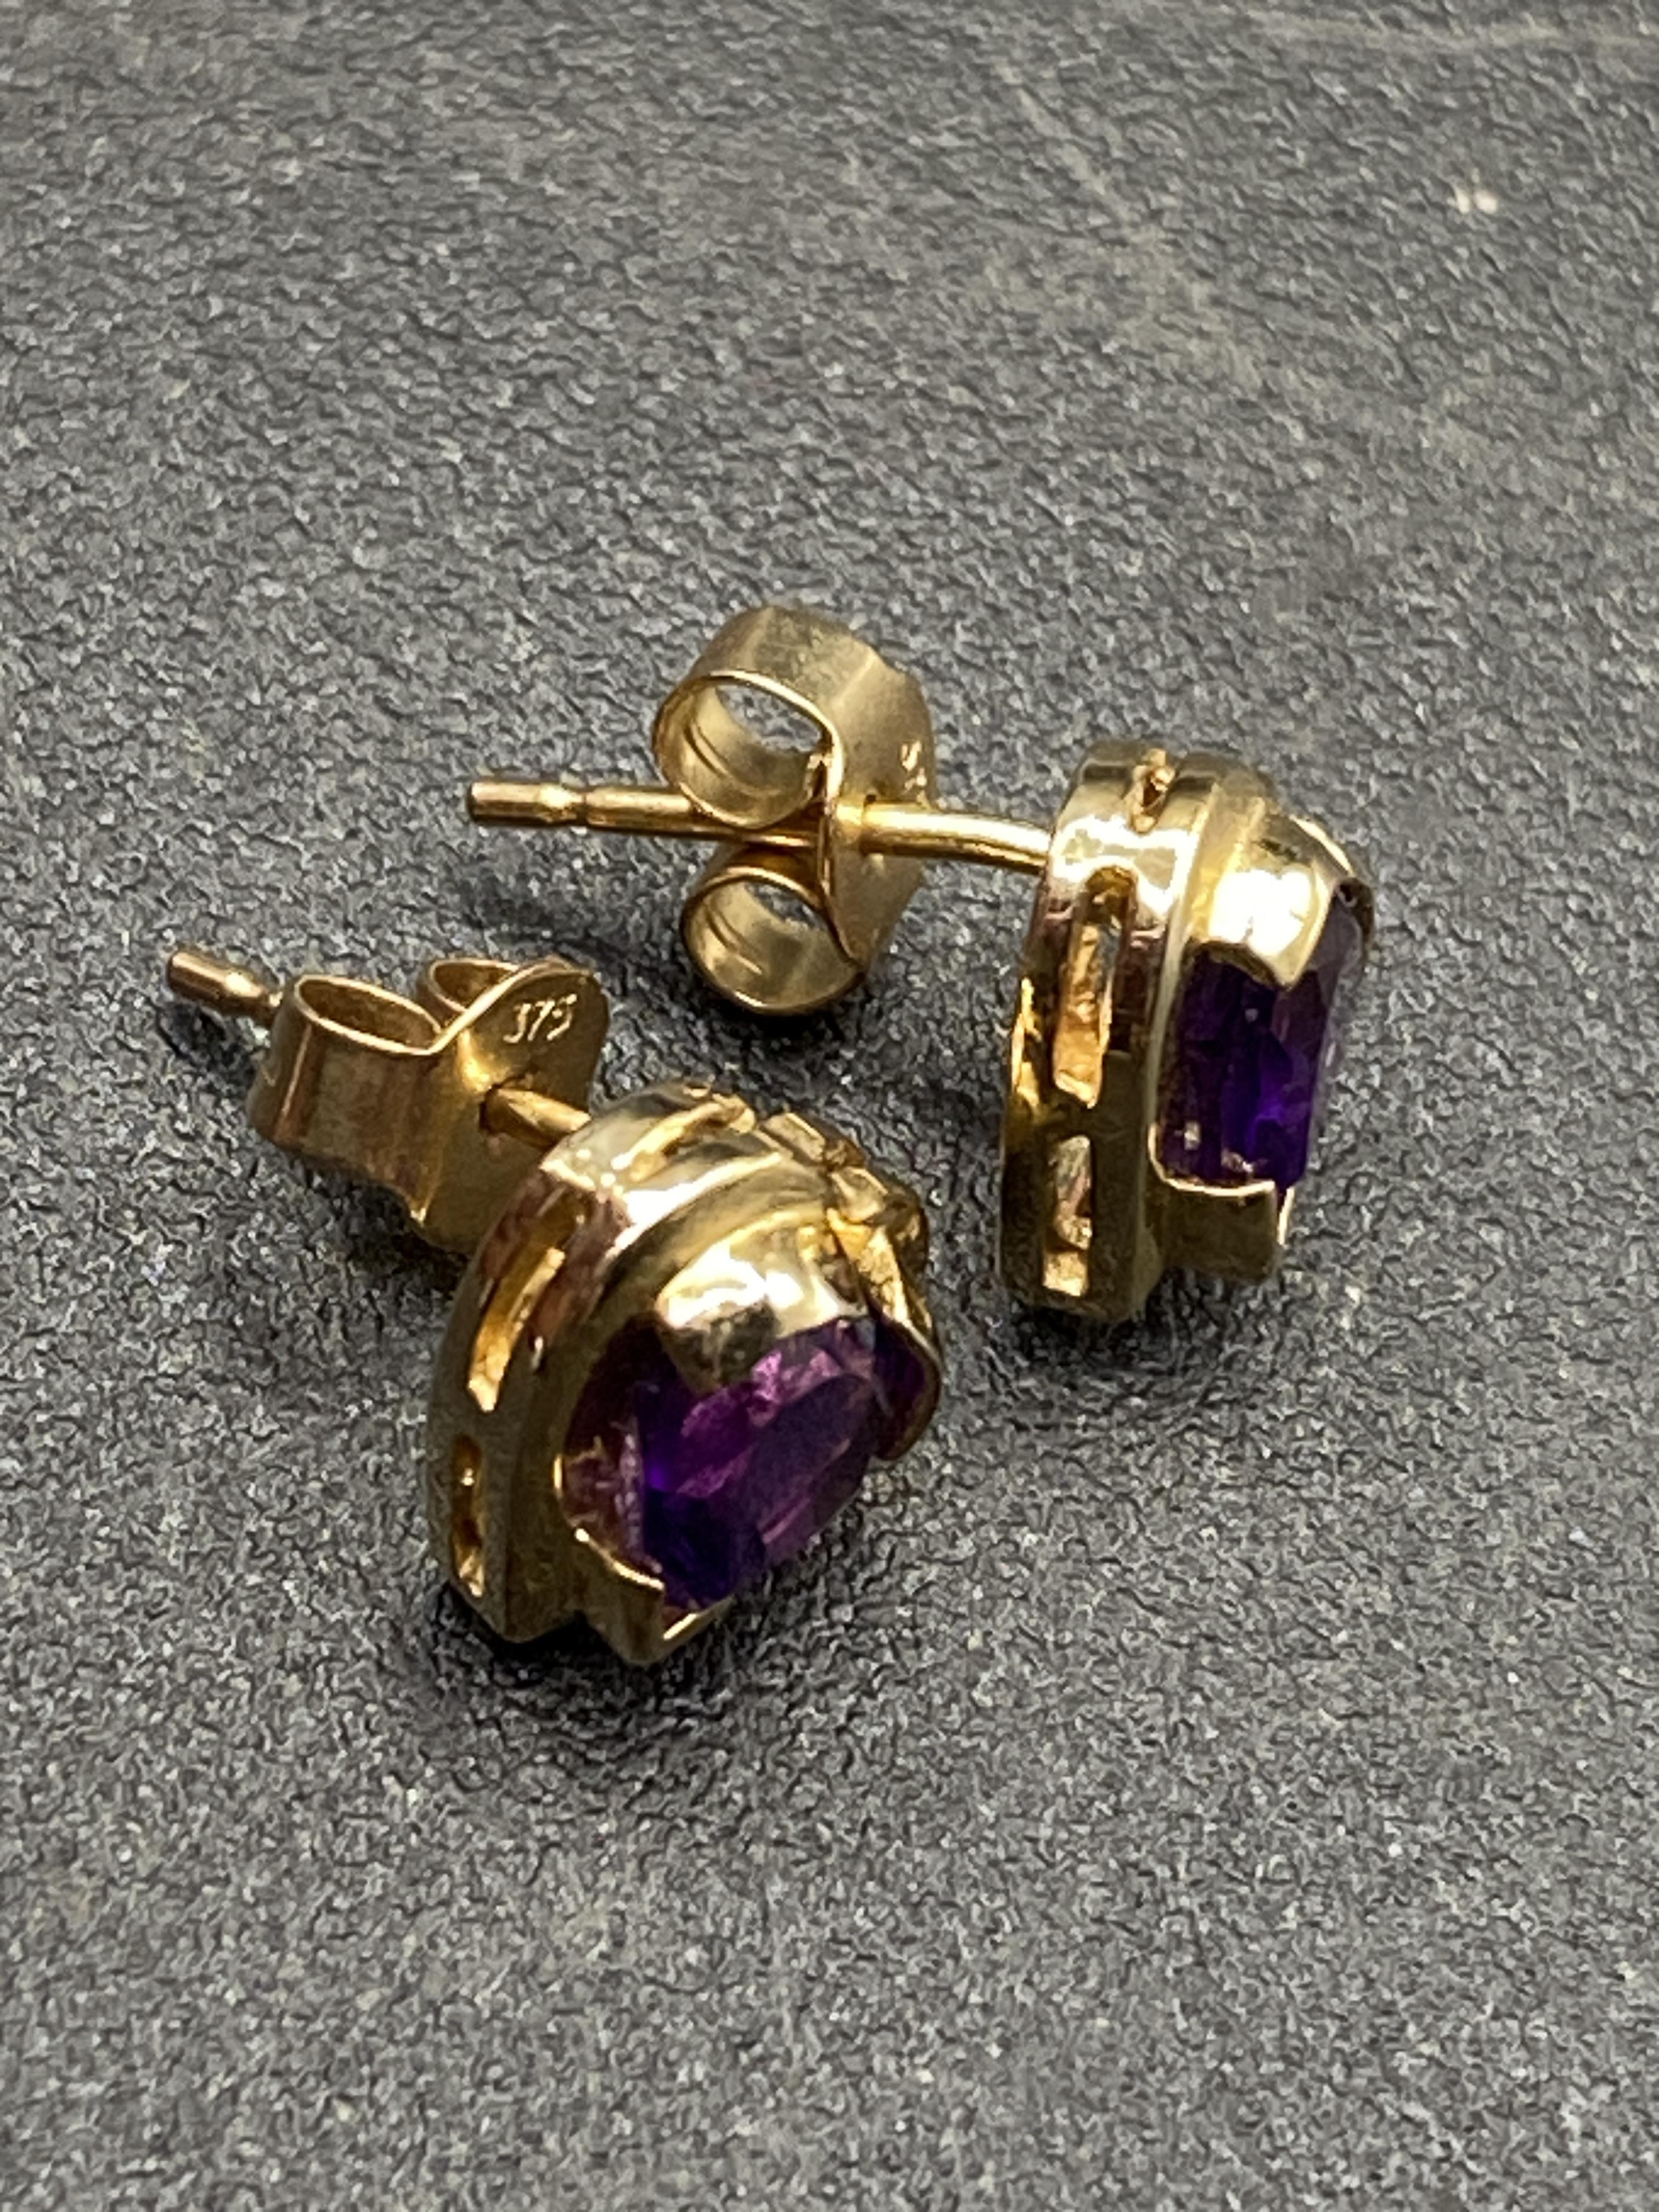 A pair of heart shaped modern amethyst earrings - Image 2 of 2